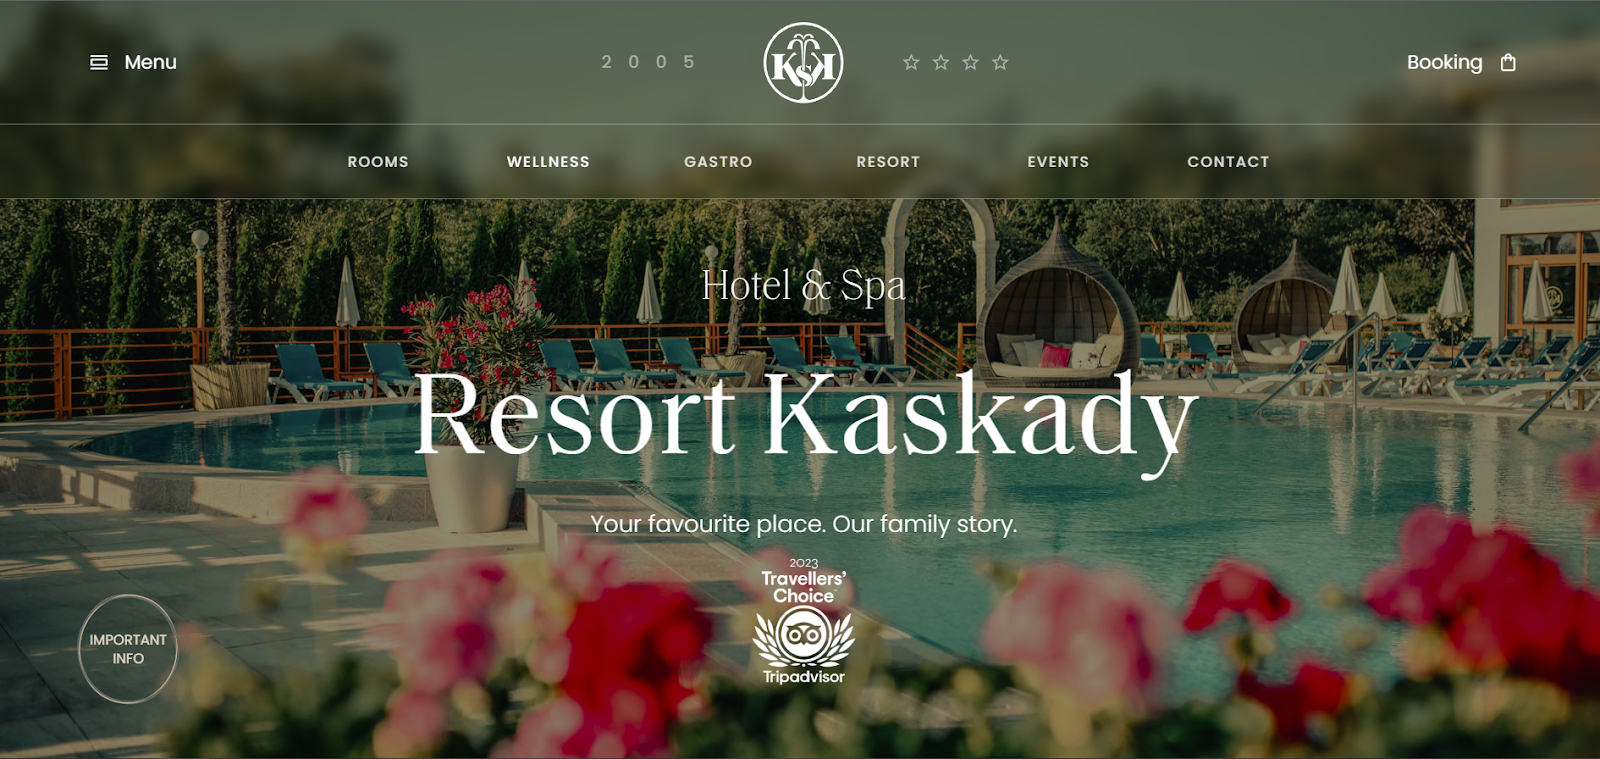 hotel website examples, Resort Kaskady